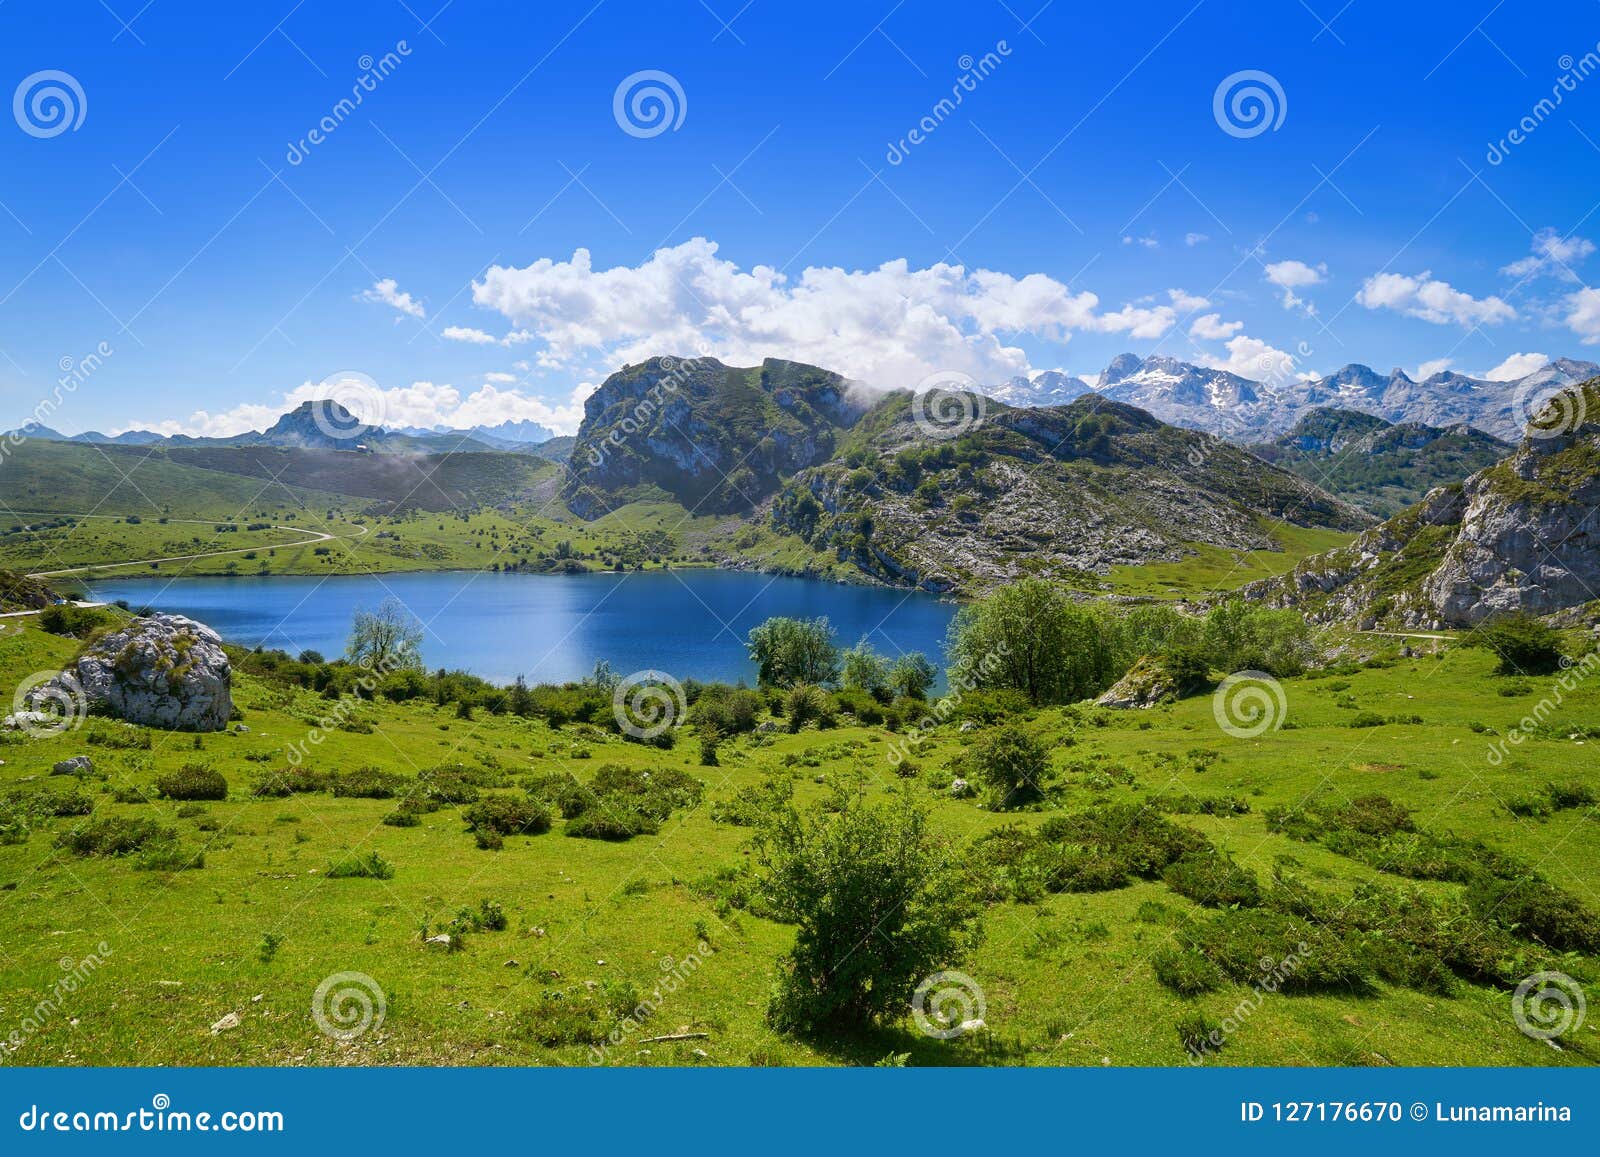 enol lake at picos de europa in asturias spain